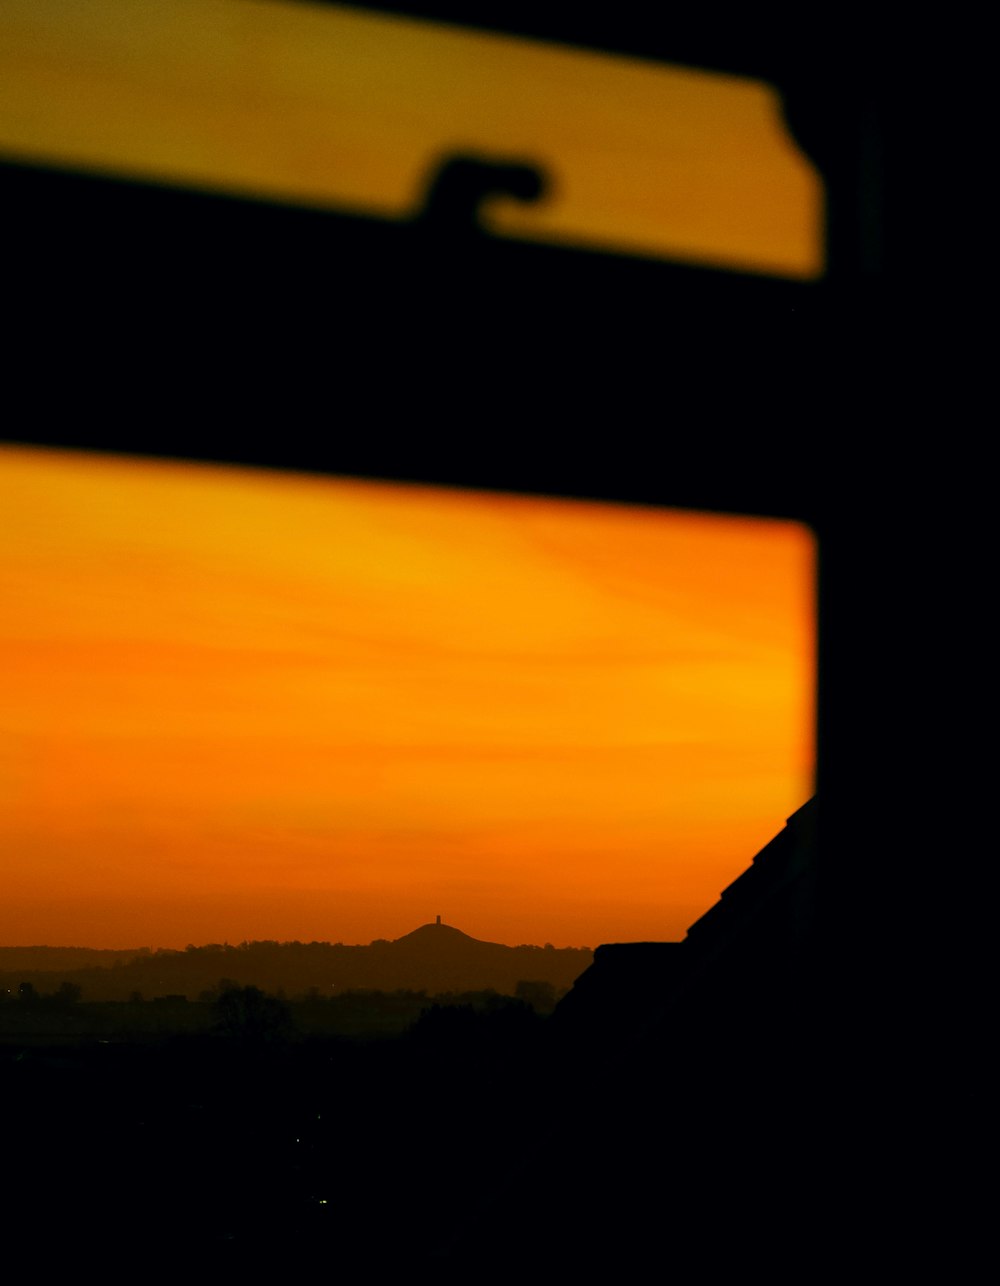 a view of a sunset through a window